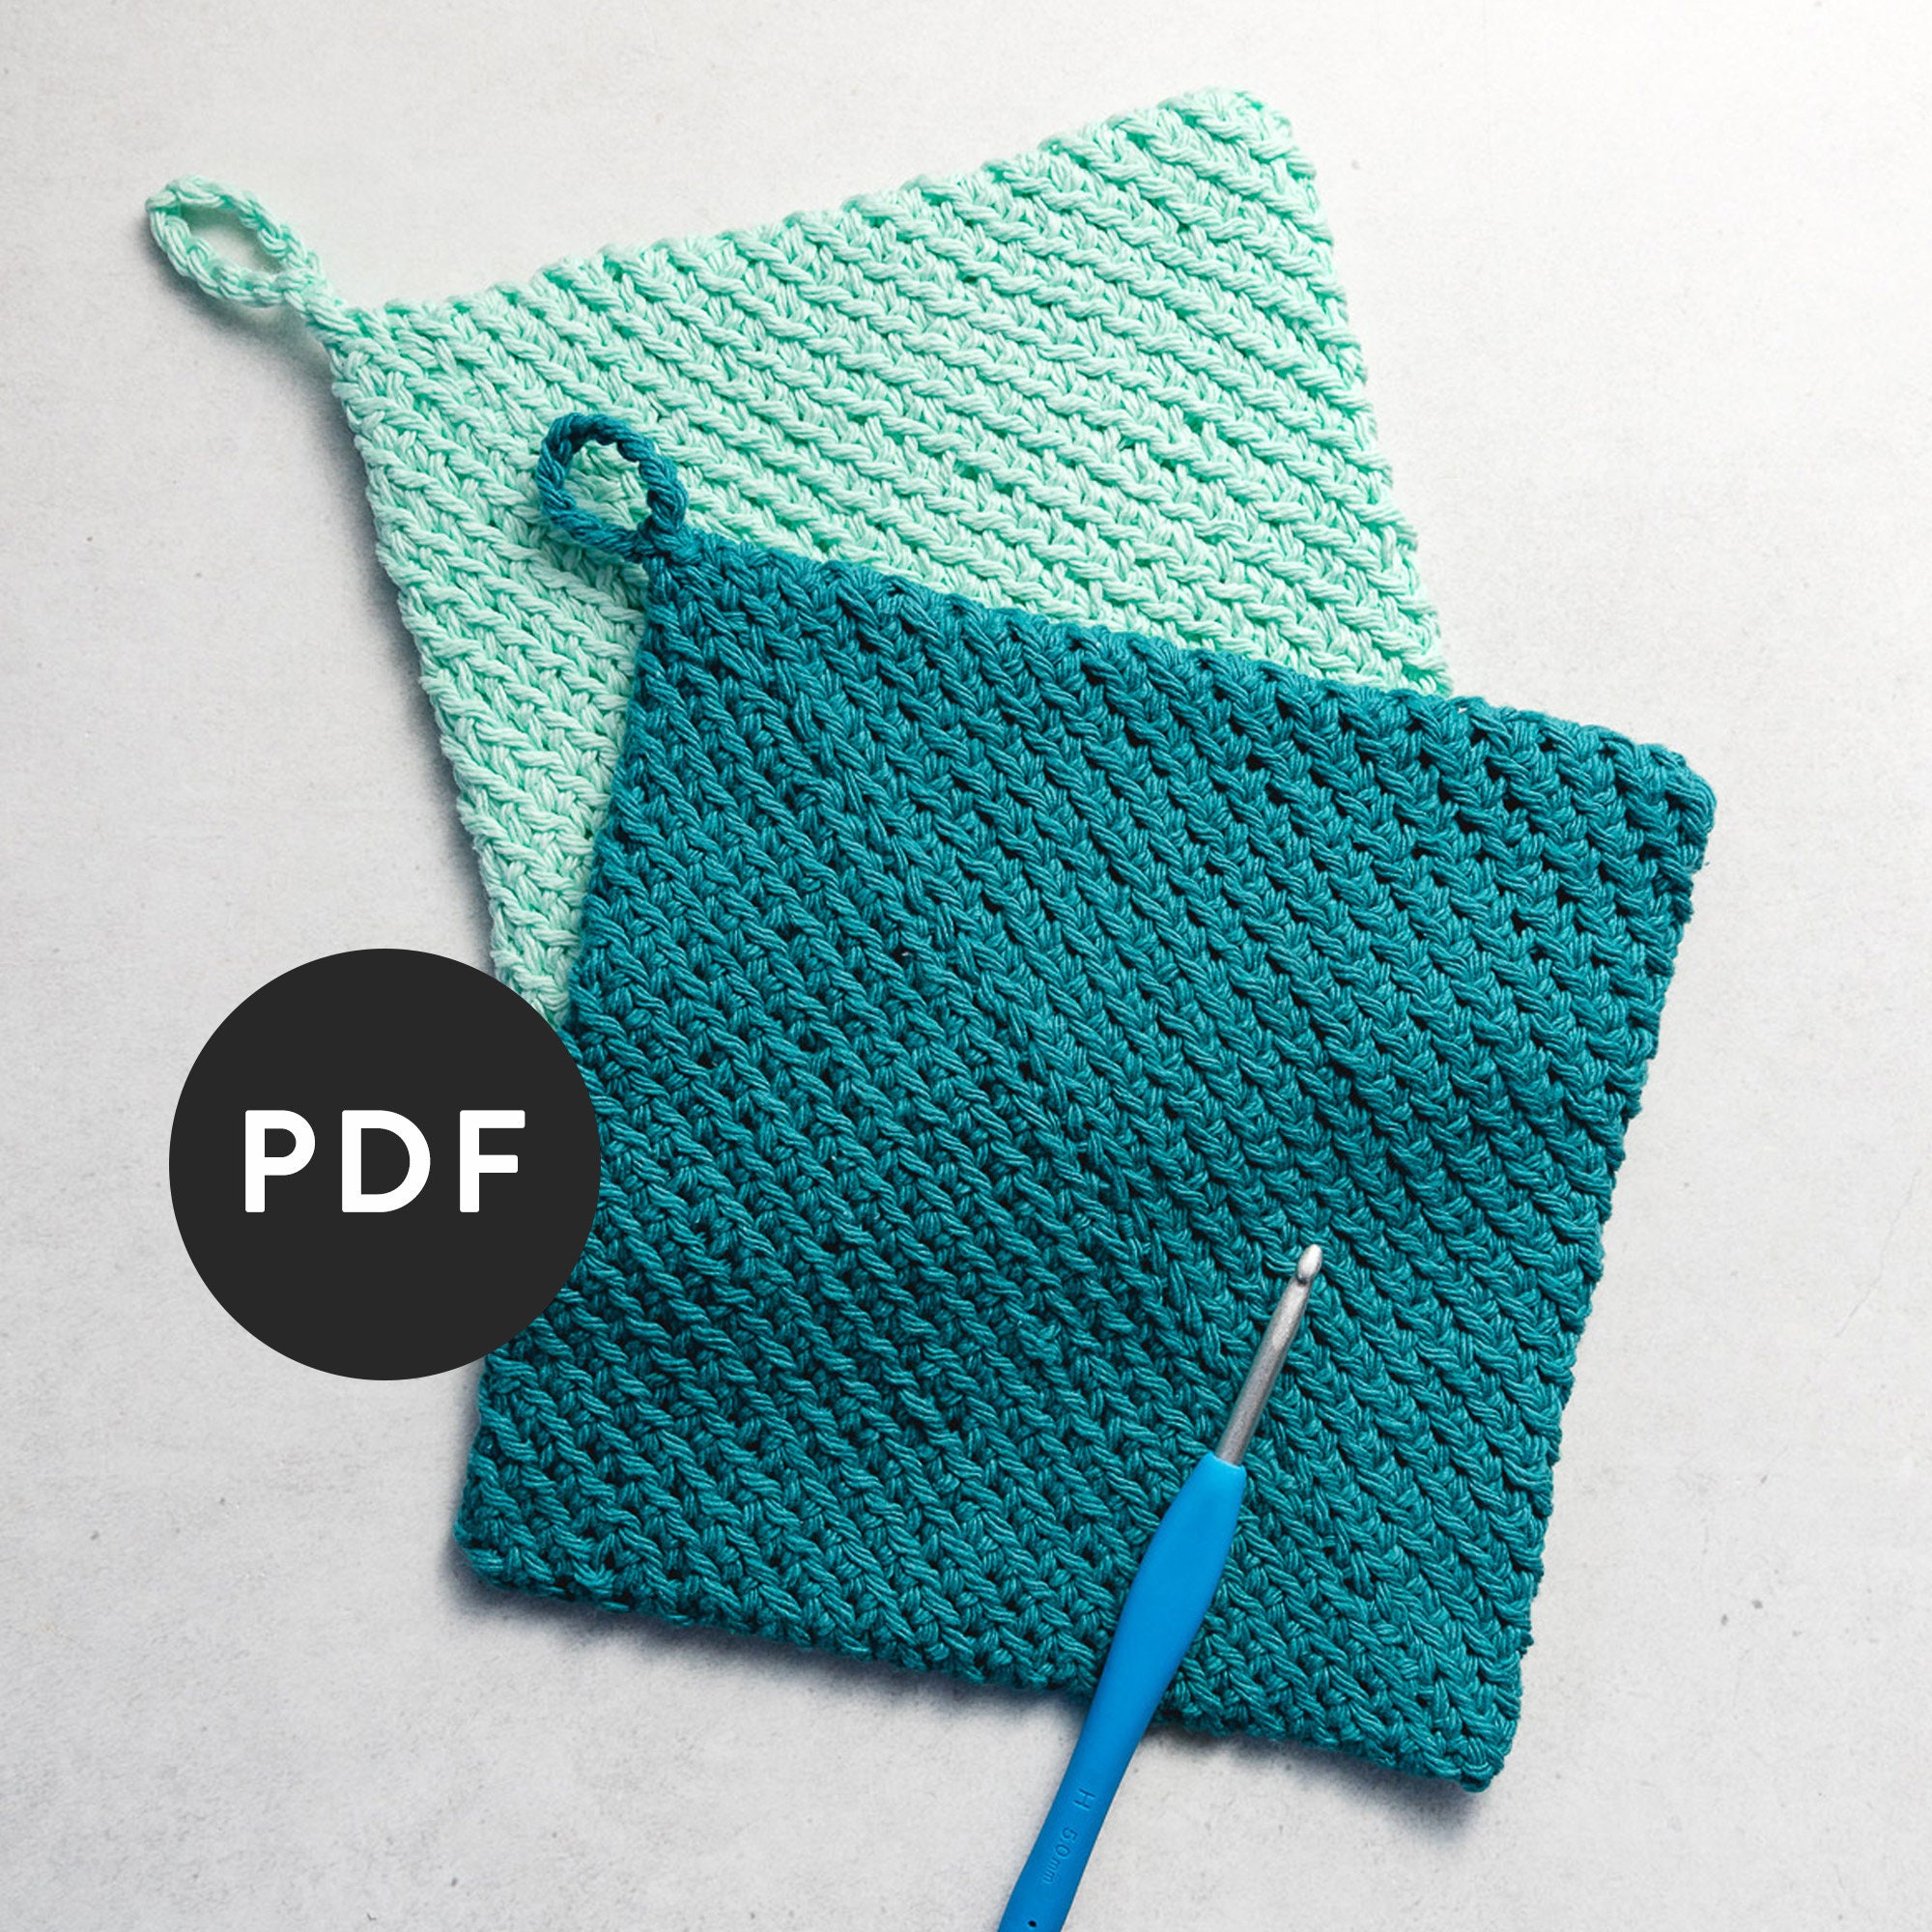 Olikraft Double Revolving Yarn Holder - Horizontal Yarn Spindle Feeder or  Dispenser - Craft Supplies for Crochet and Knitting